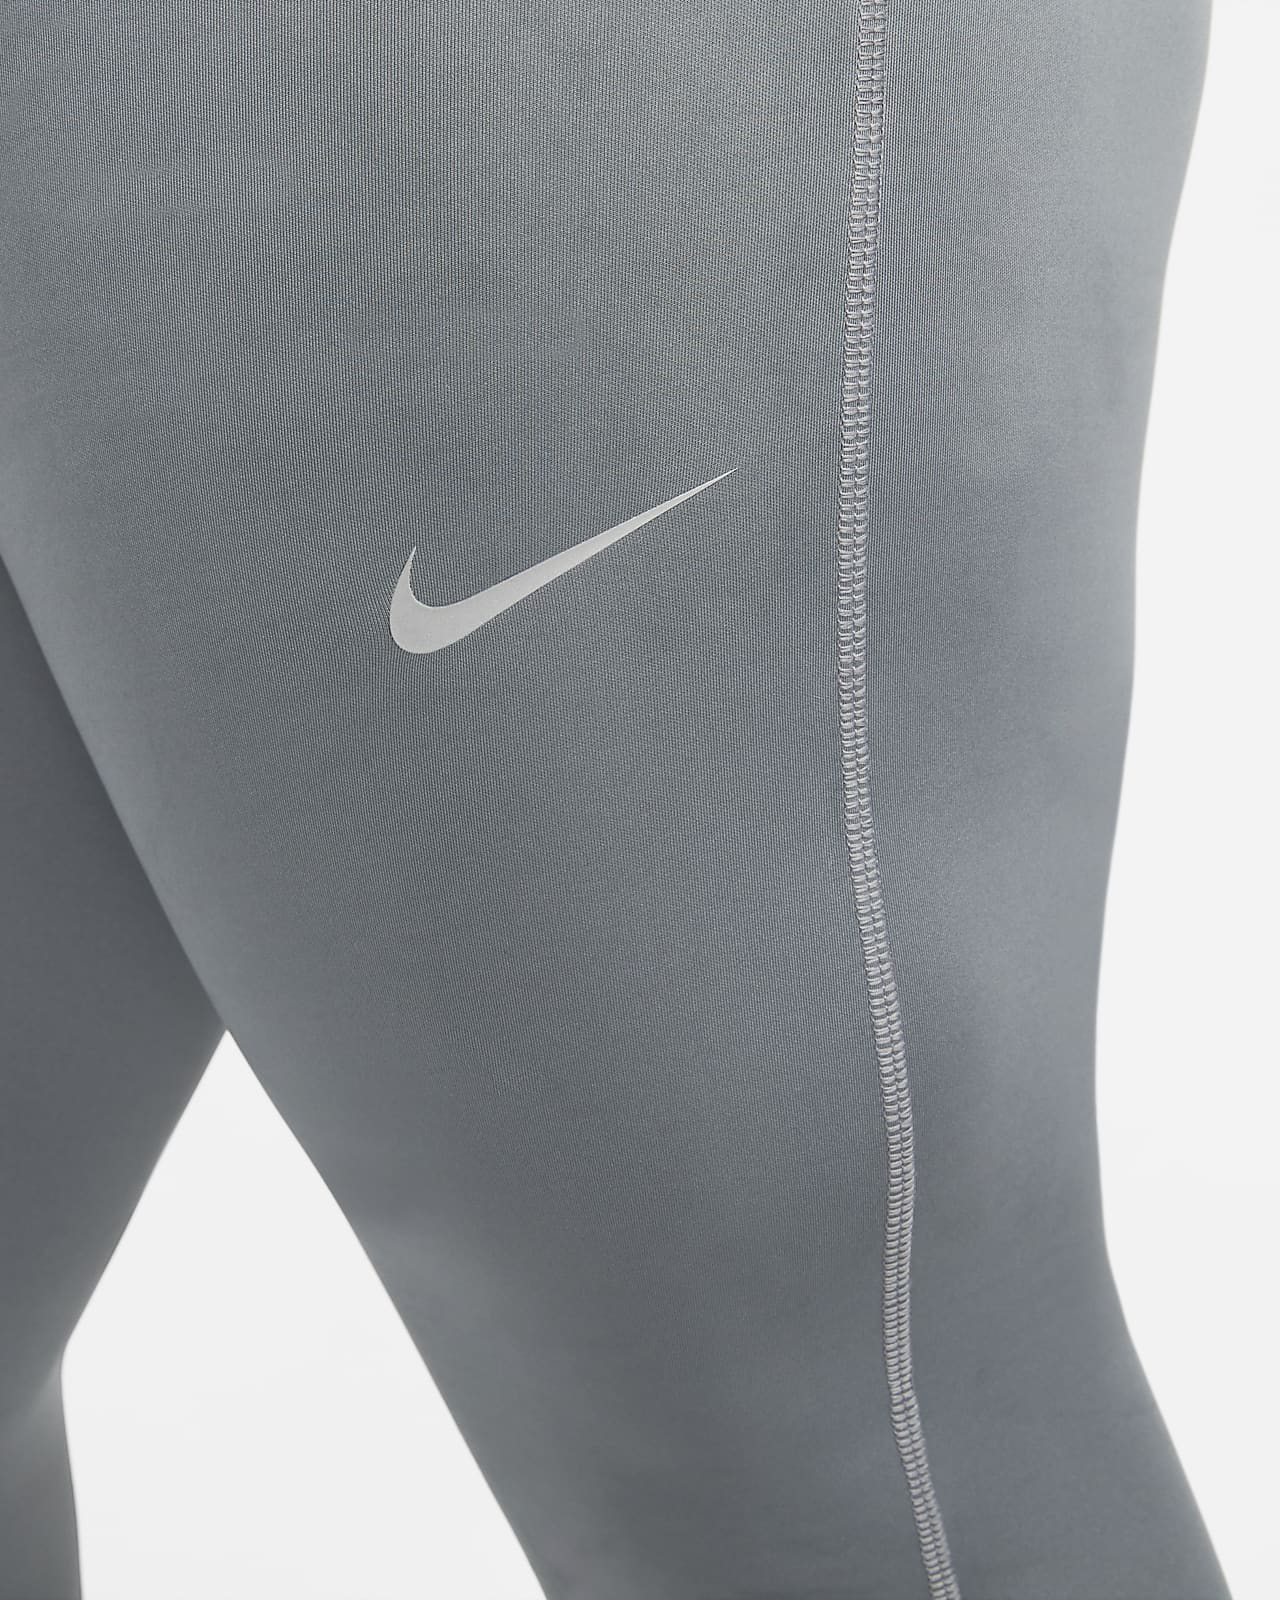  Nike Pro Dri-FIT Men's Tights(Black/White, Small